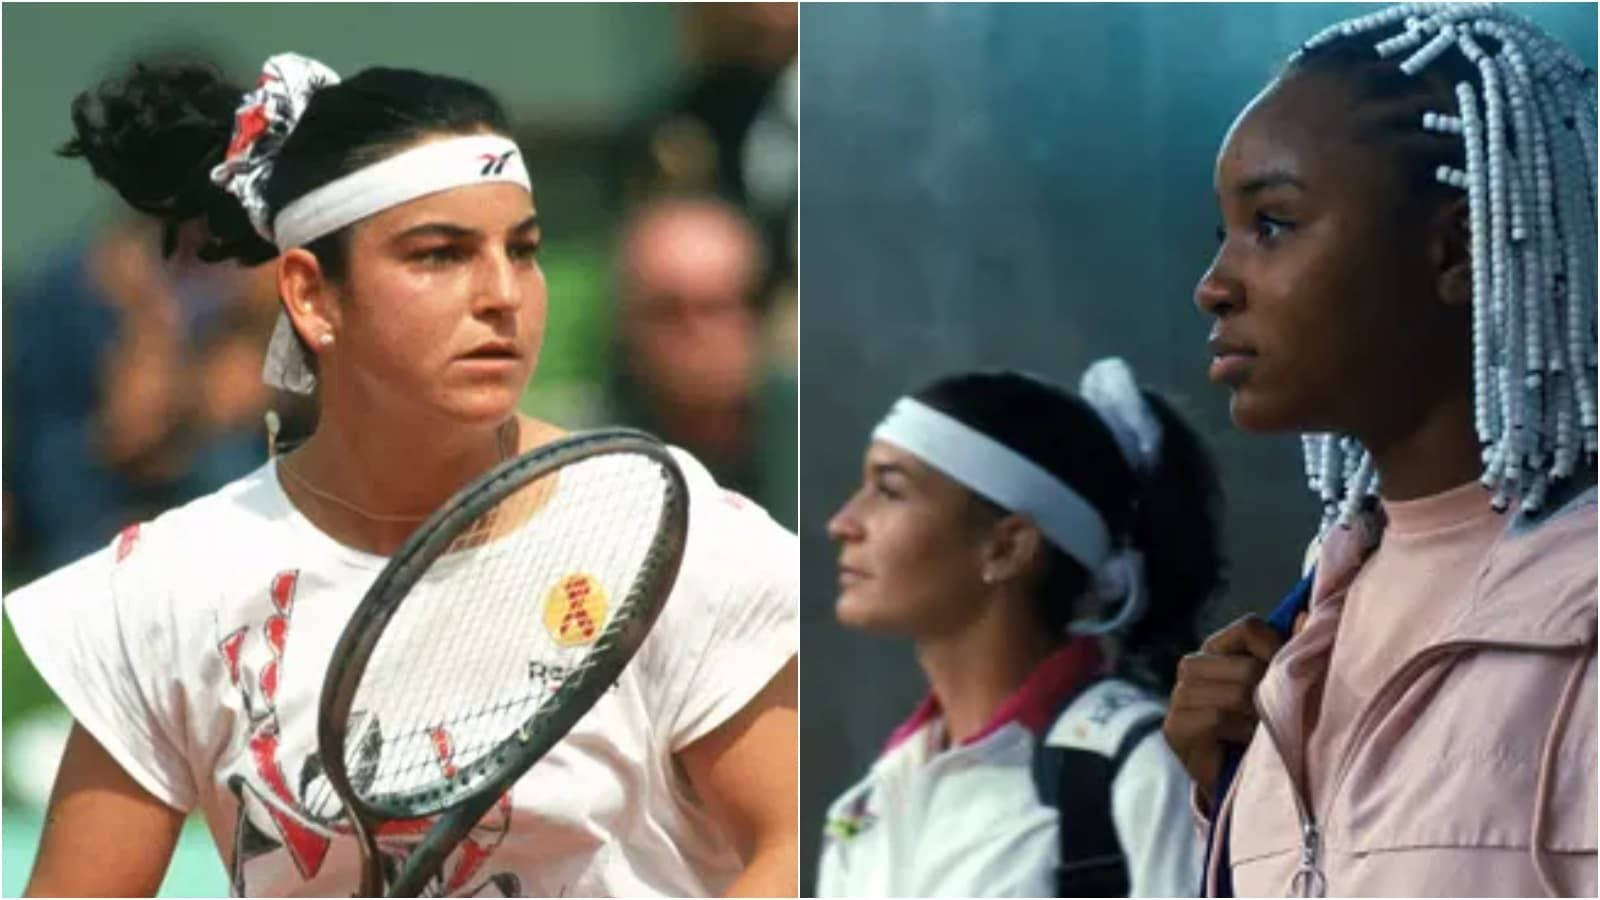 A thrilling match between Arantxa Sánchez Vicario and Venus Williams Wallpaper